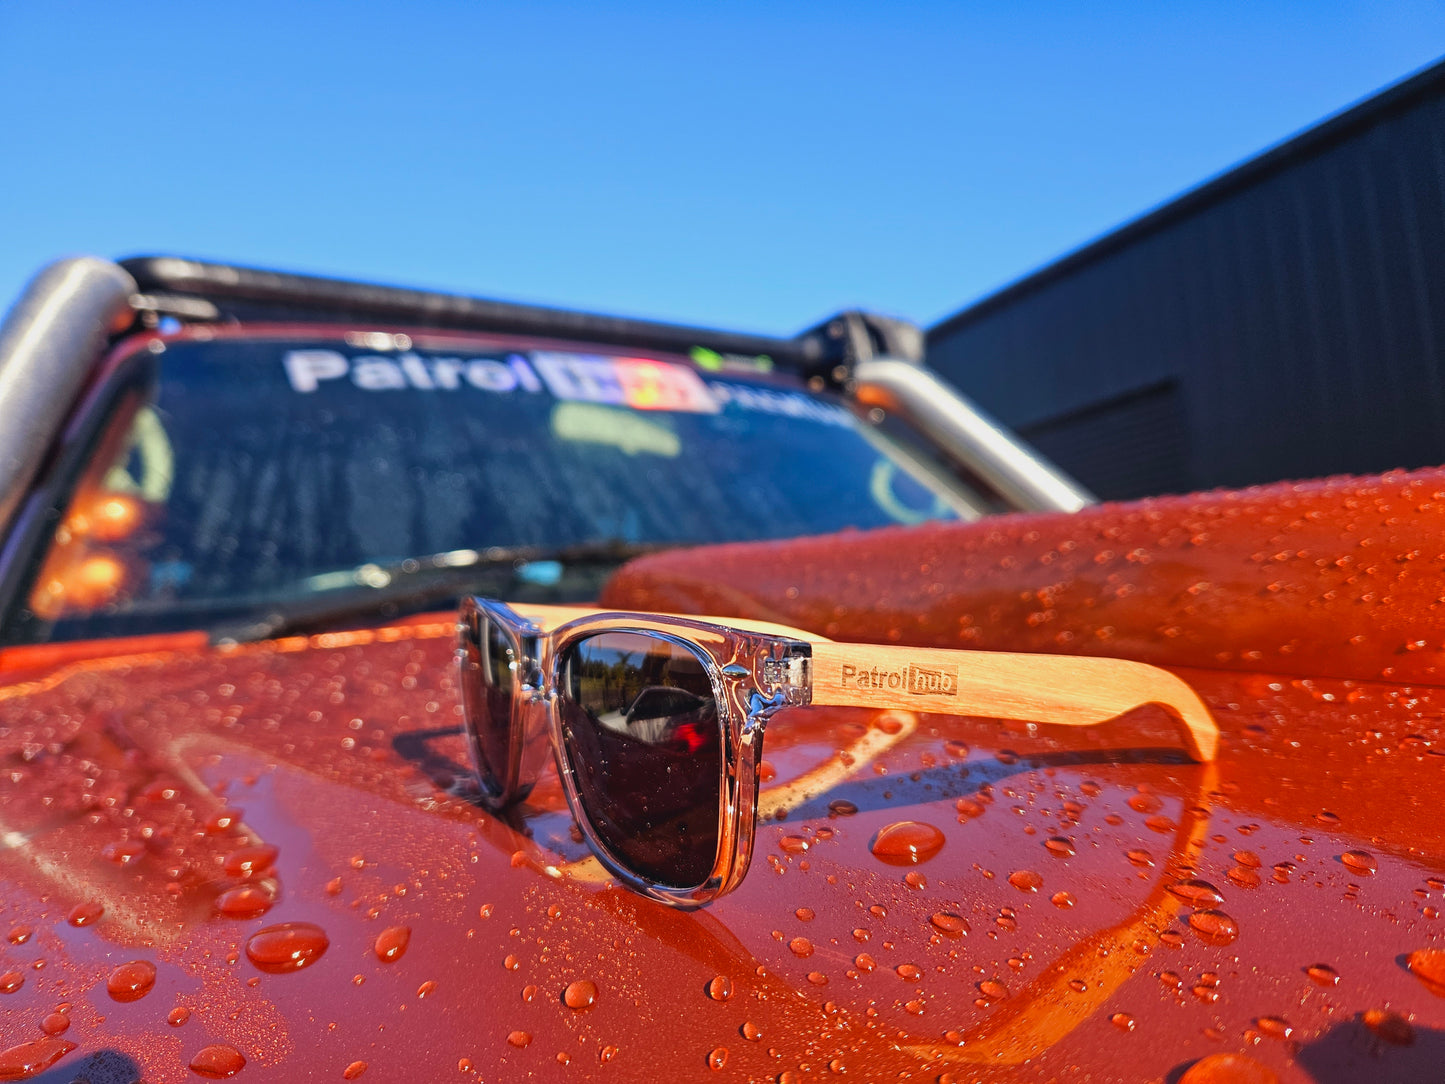 Patrol Hub Sunglasses